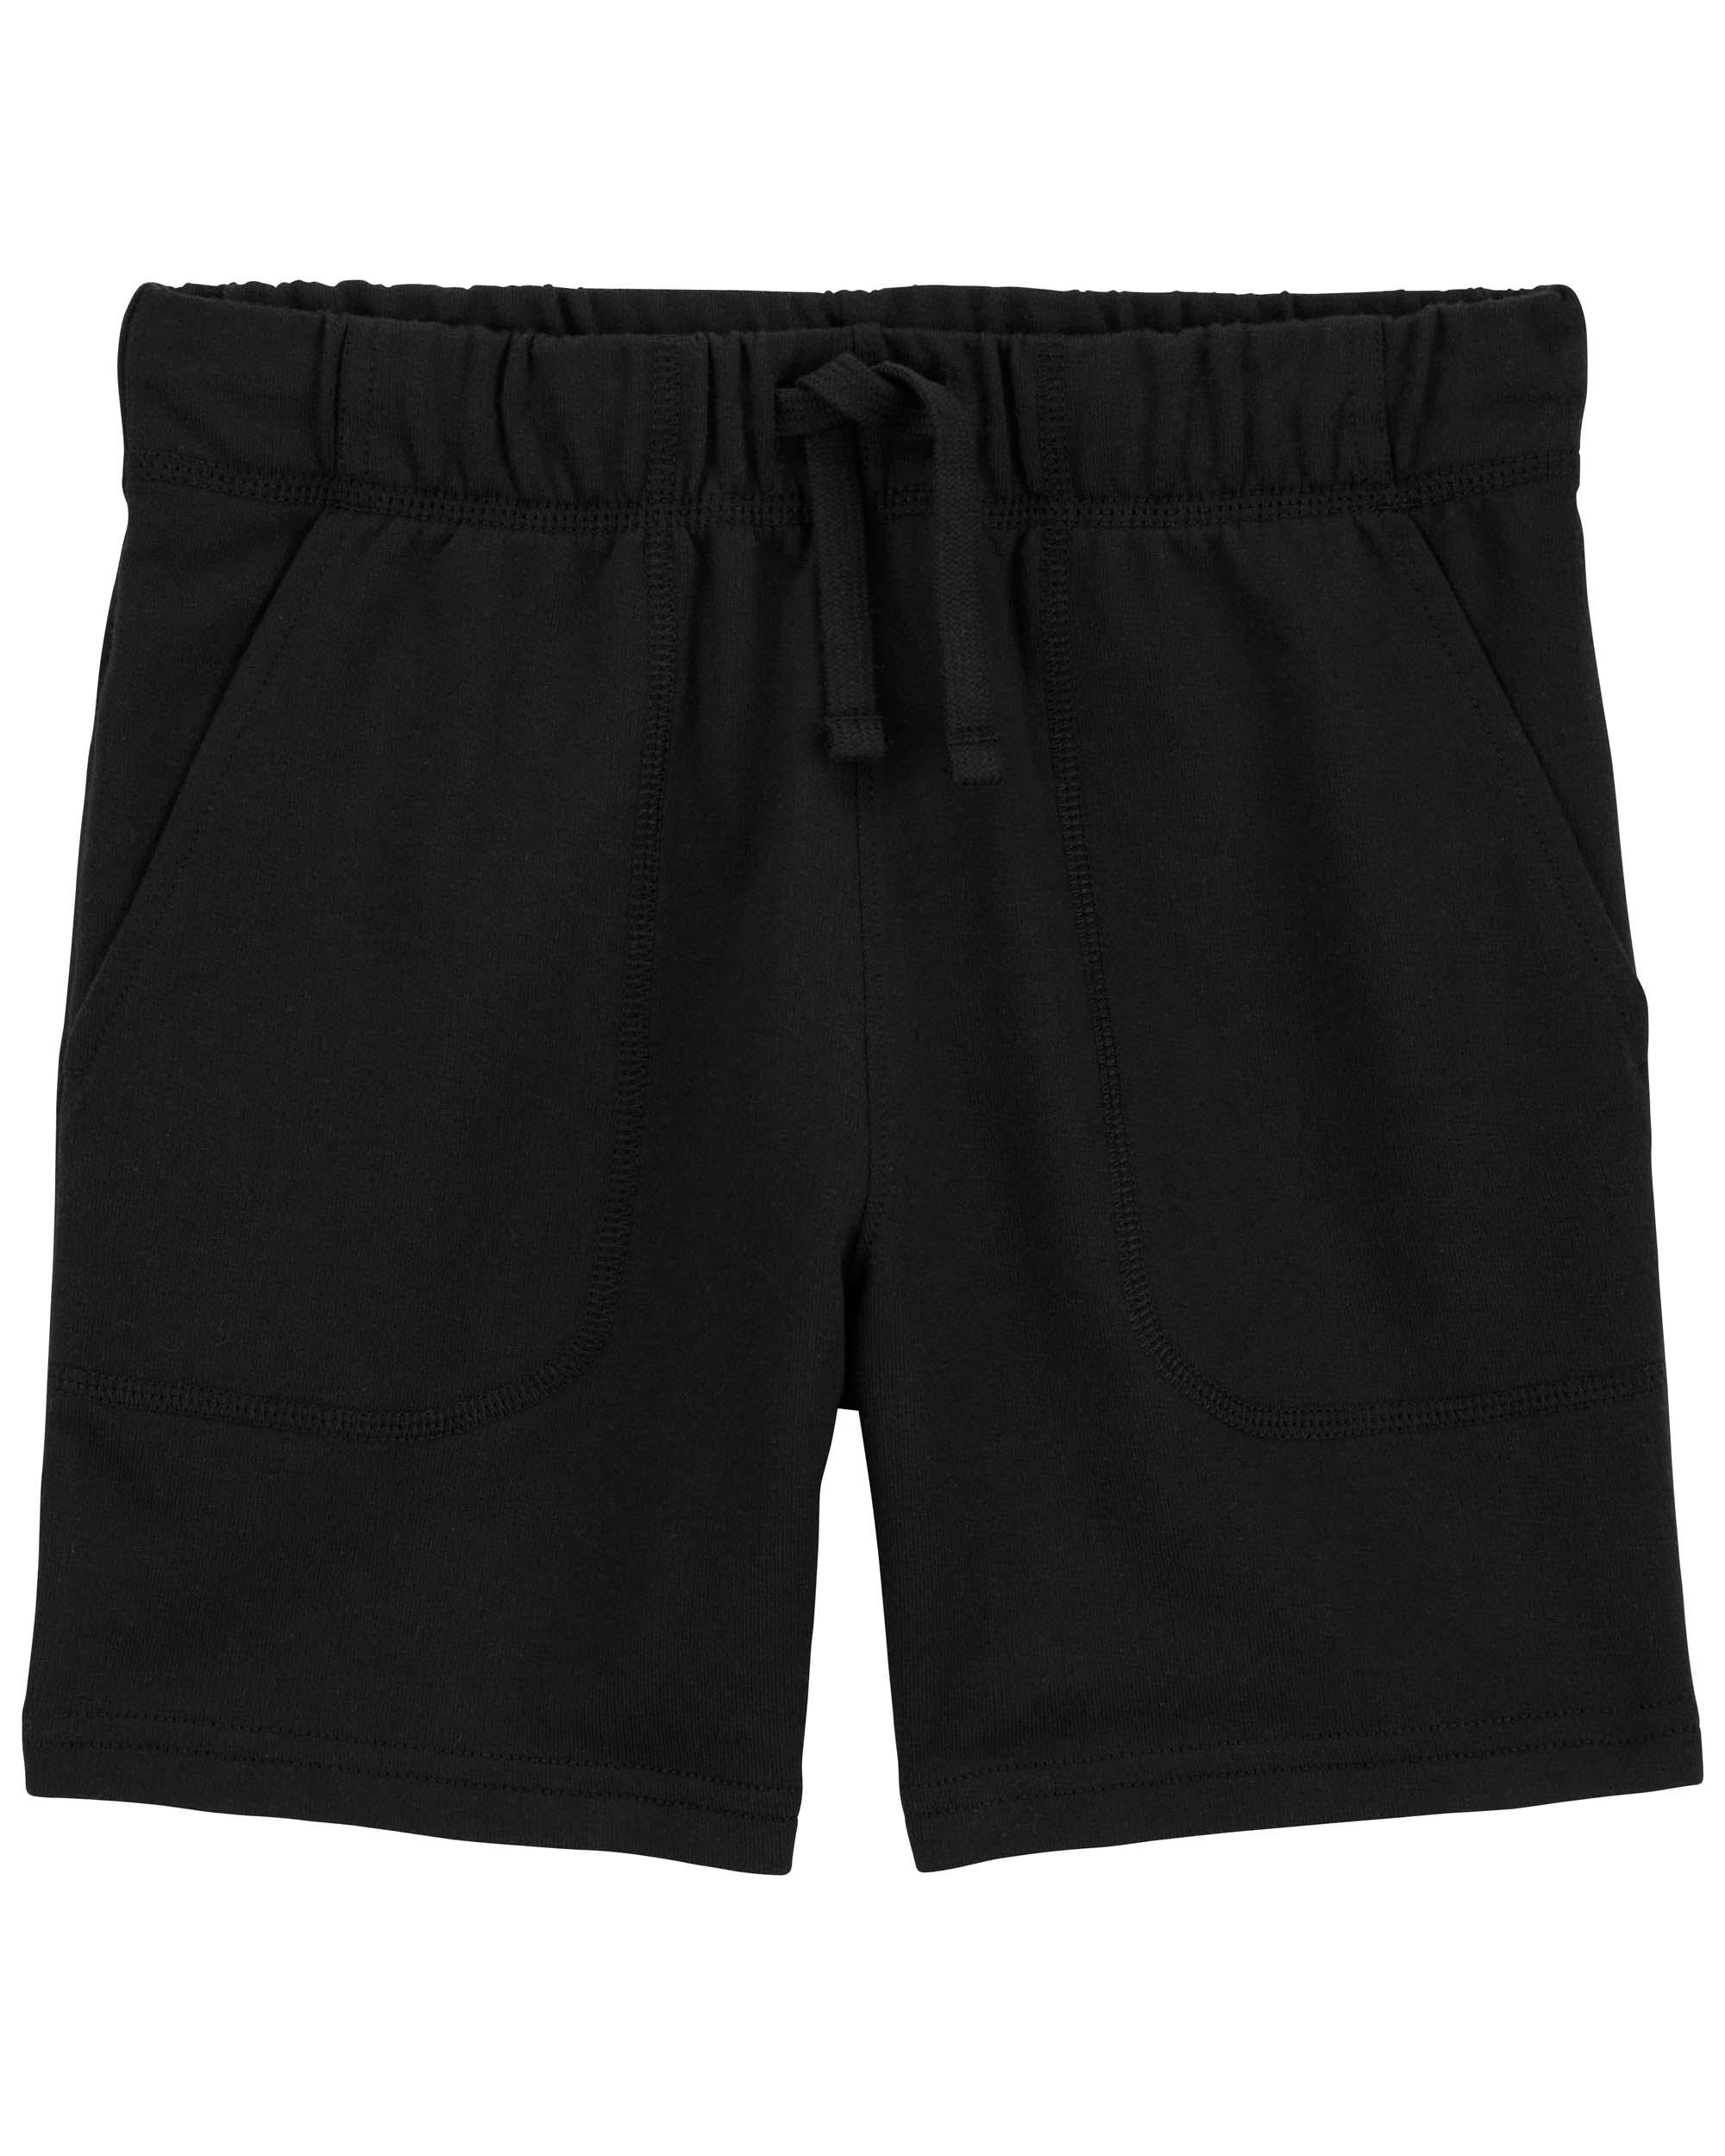 Black Pull-On Cotton Shorts